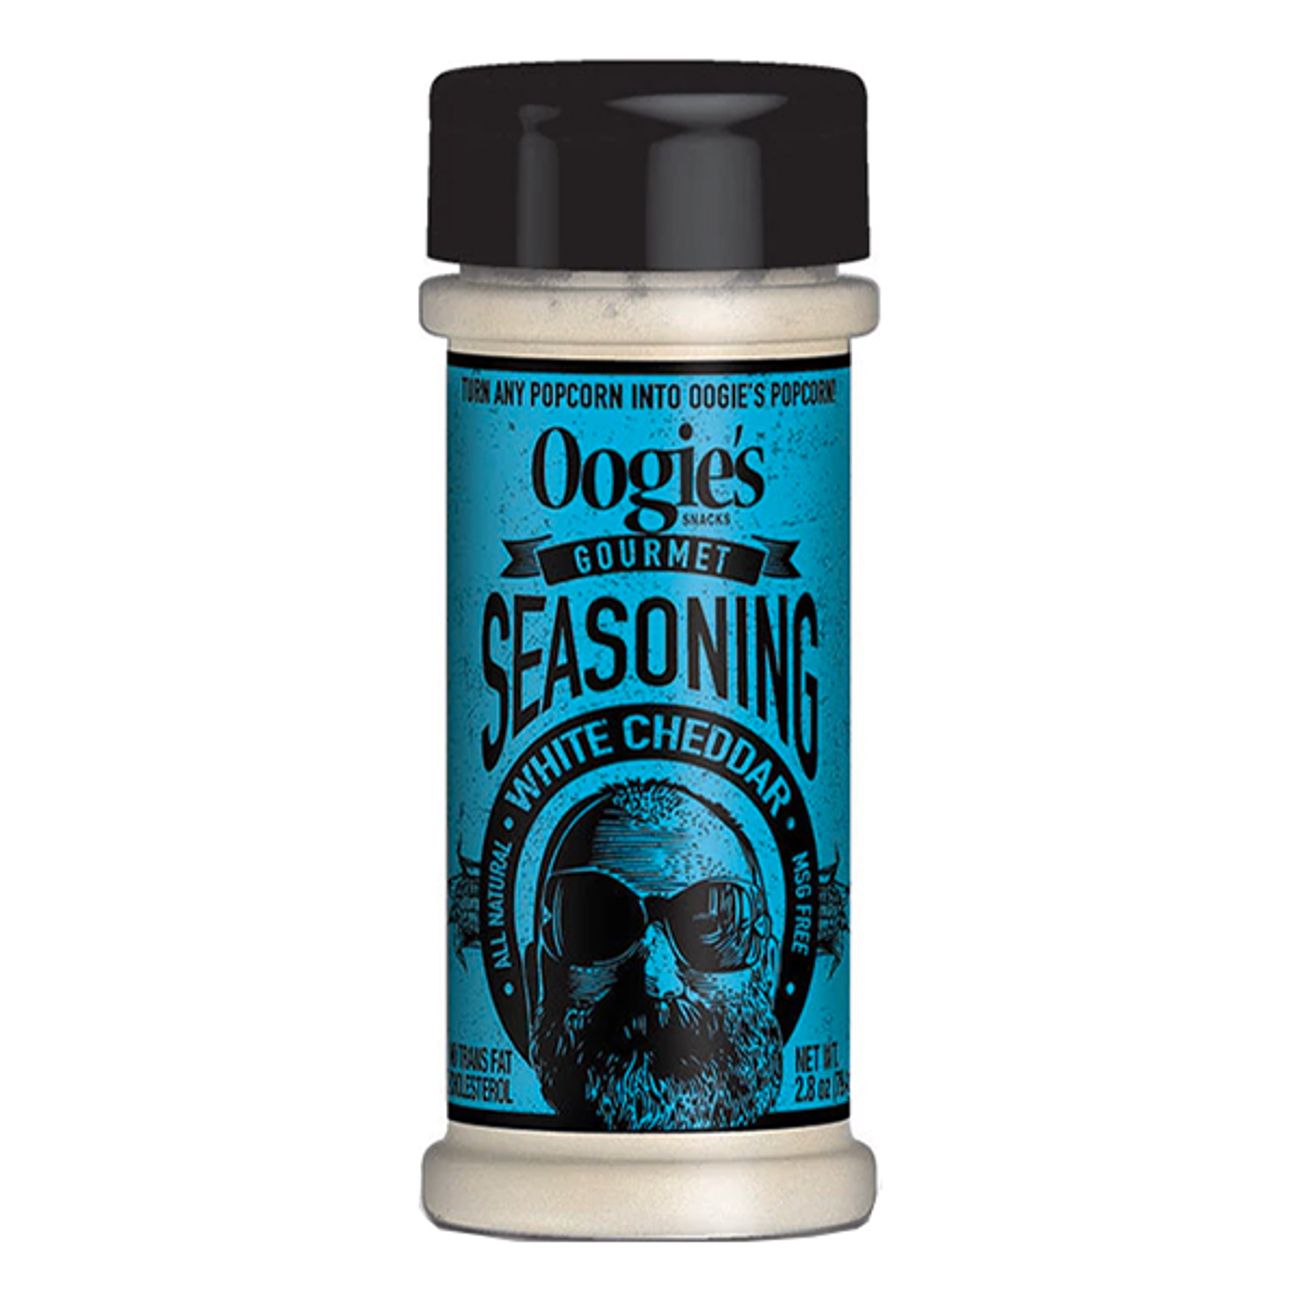 oogies-seasoning-popcornkrydda-3